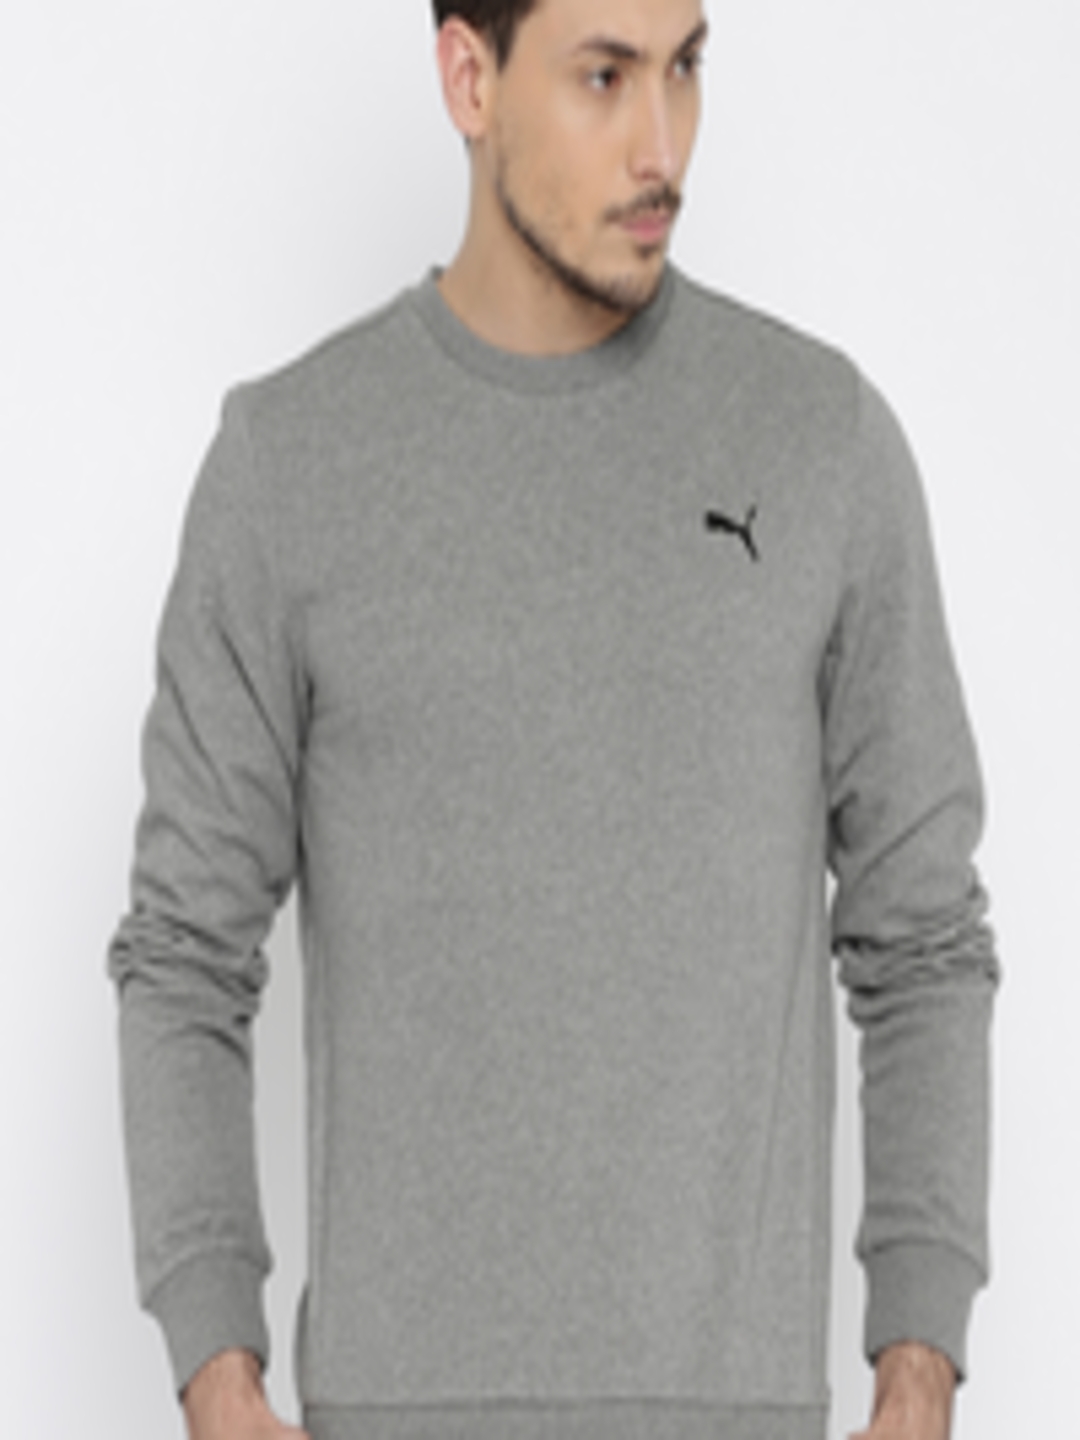 Buy Puma Men Grey Solid Sweatshirt - Sweatshirts for Men 2317241 | Myntra